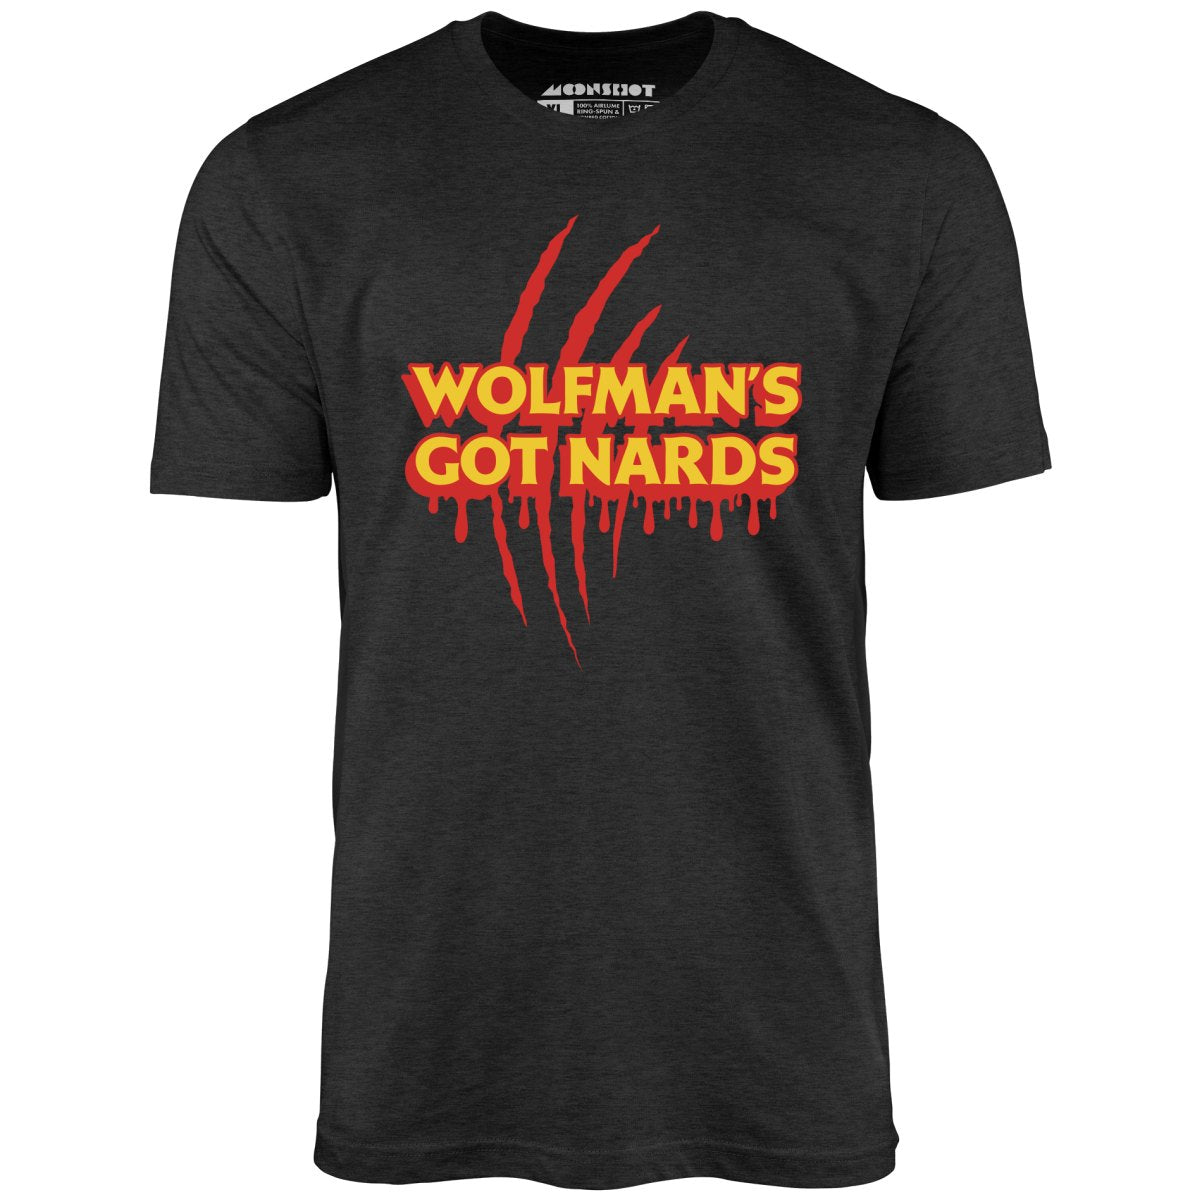 Wolfman's Got Nards - Unisex T-Shirt